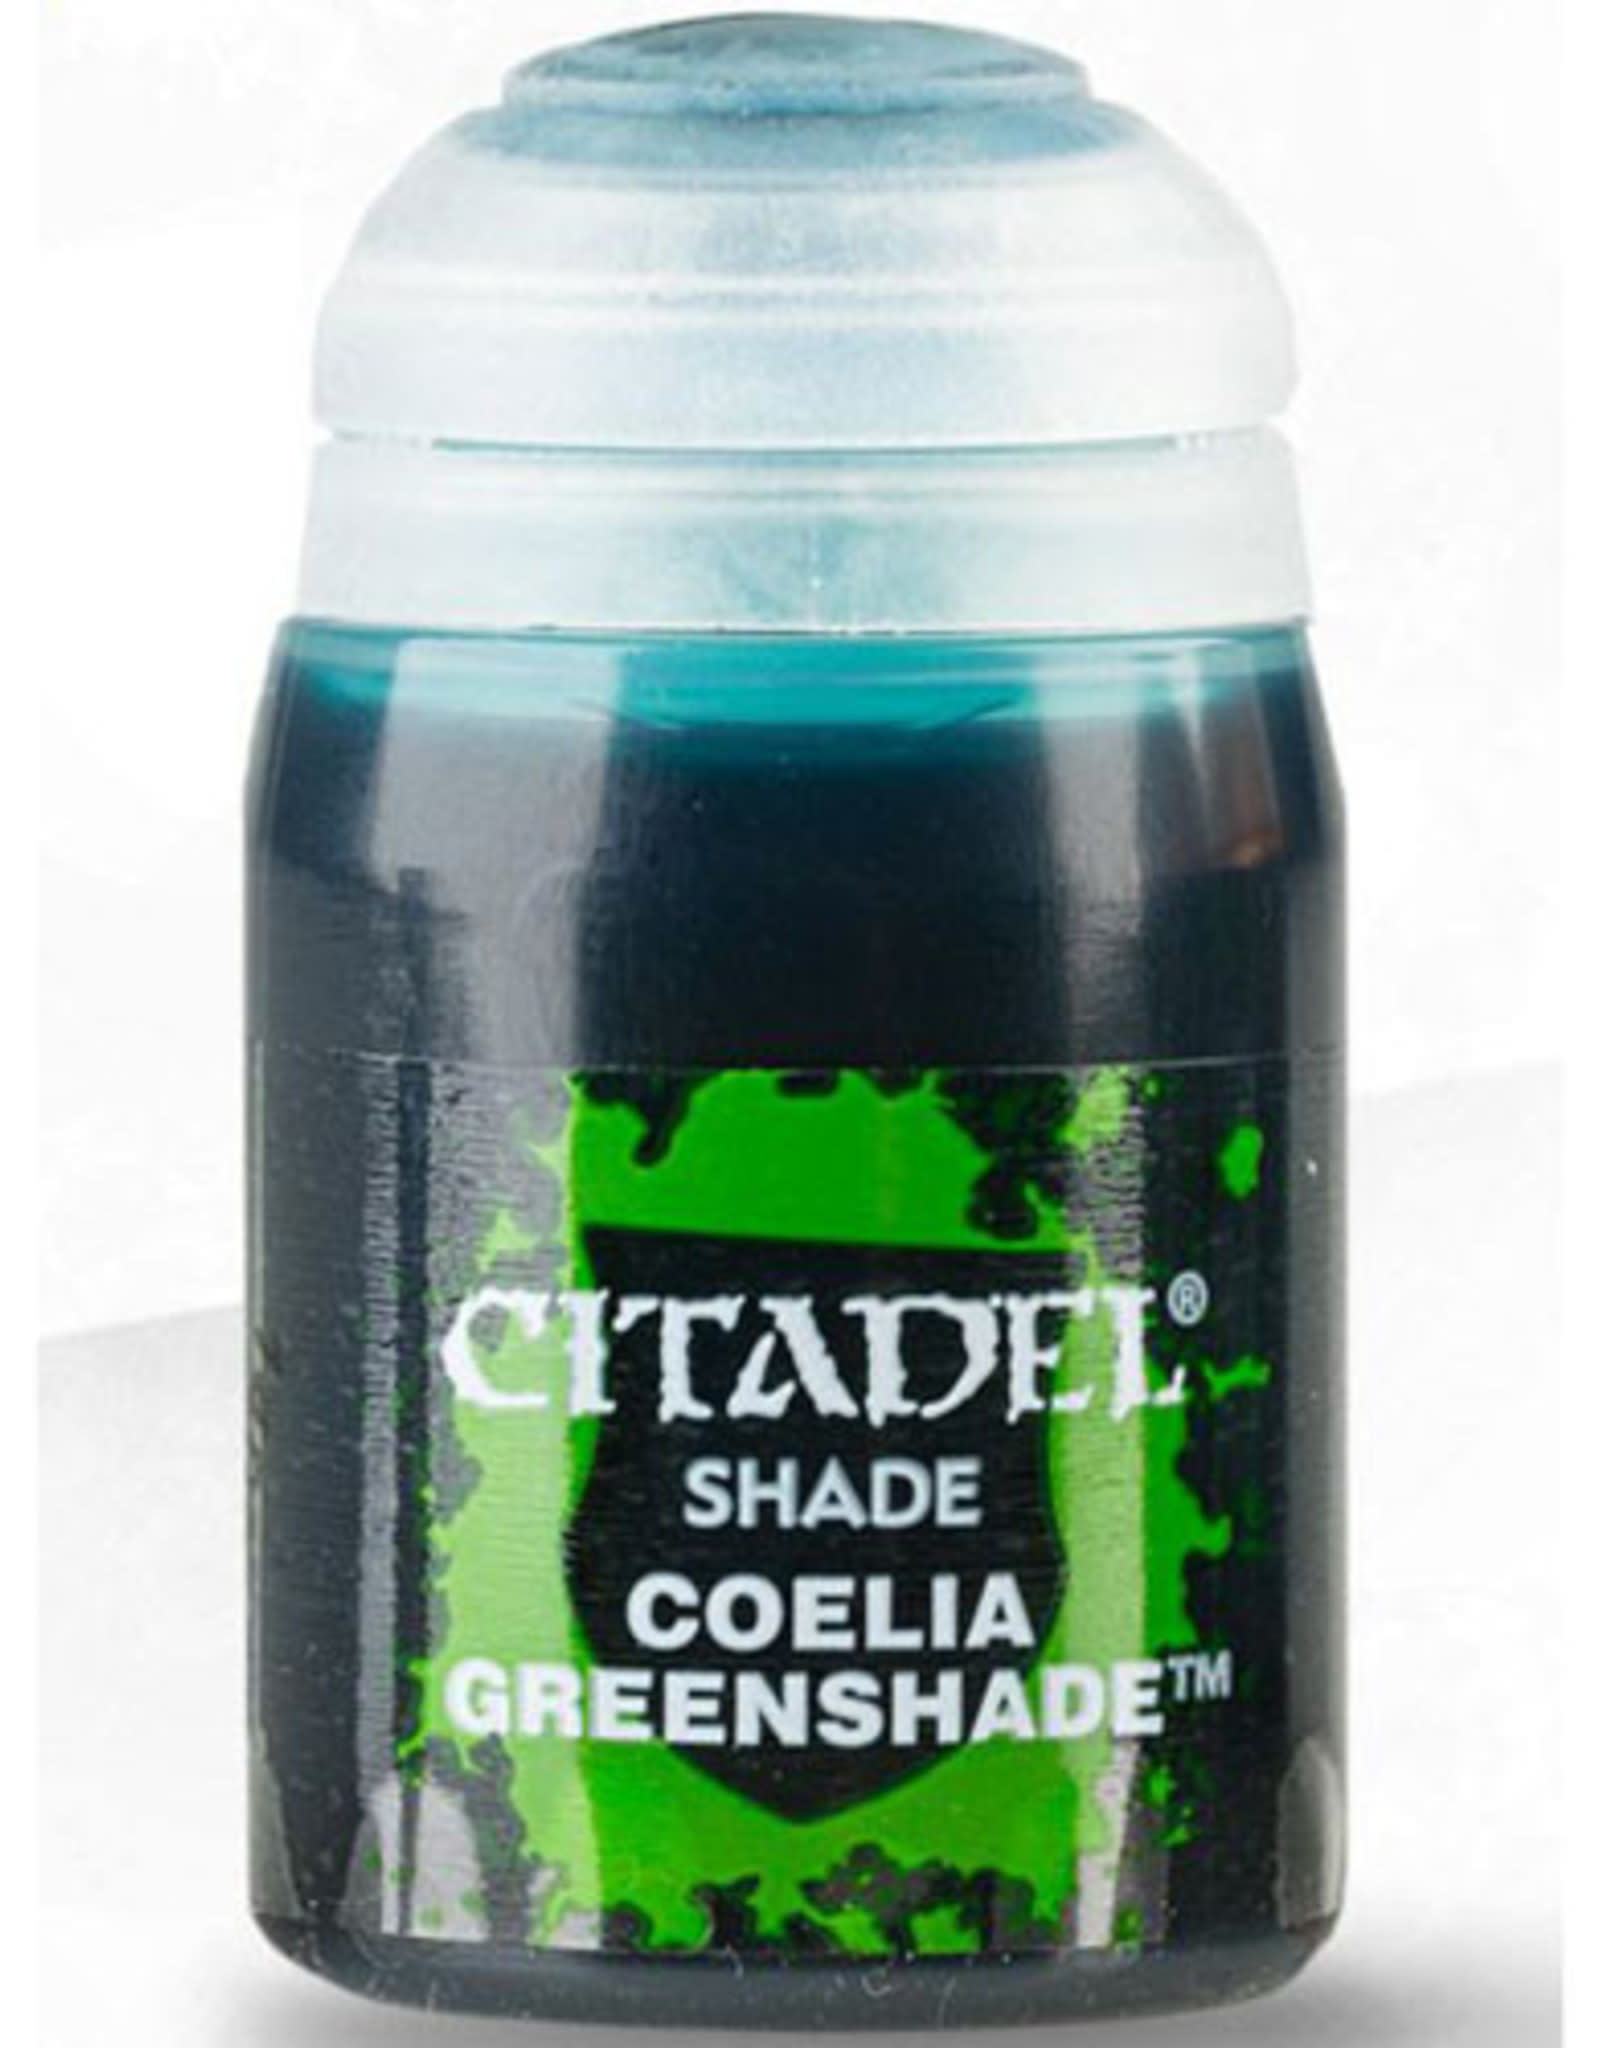 Games Workshop Citadel - Shade - Coelia Greenshade